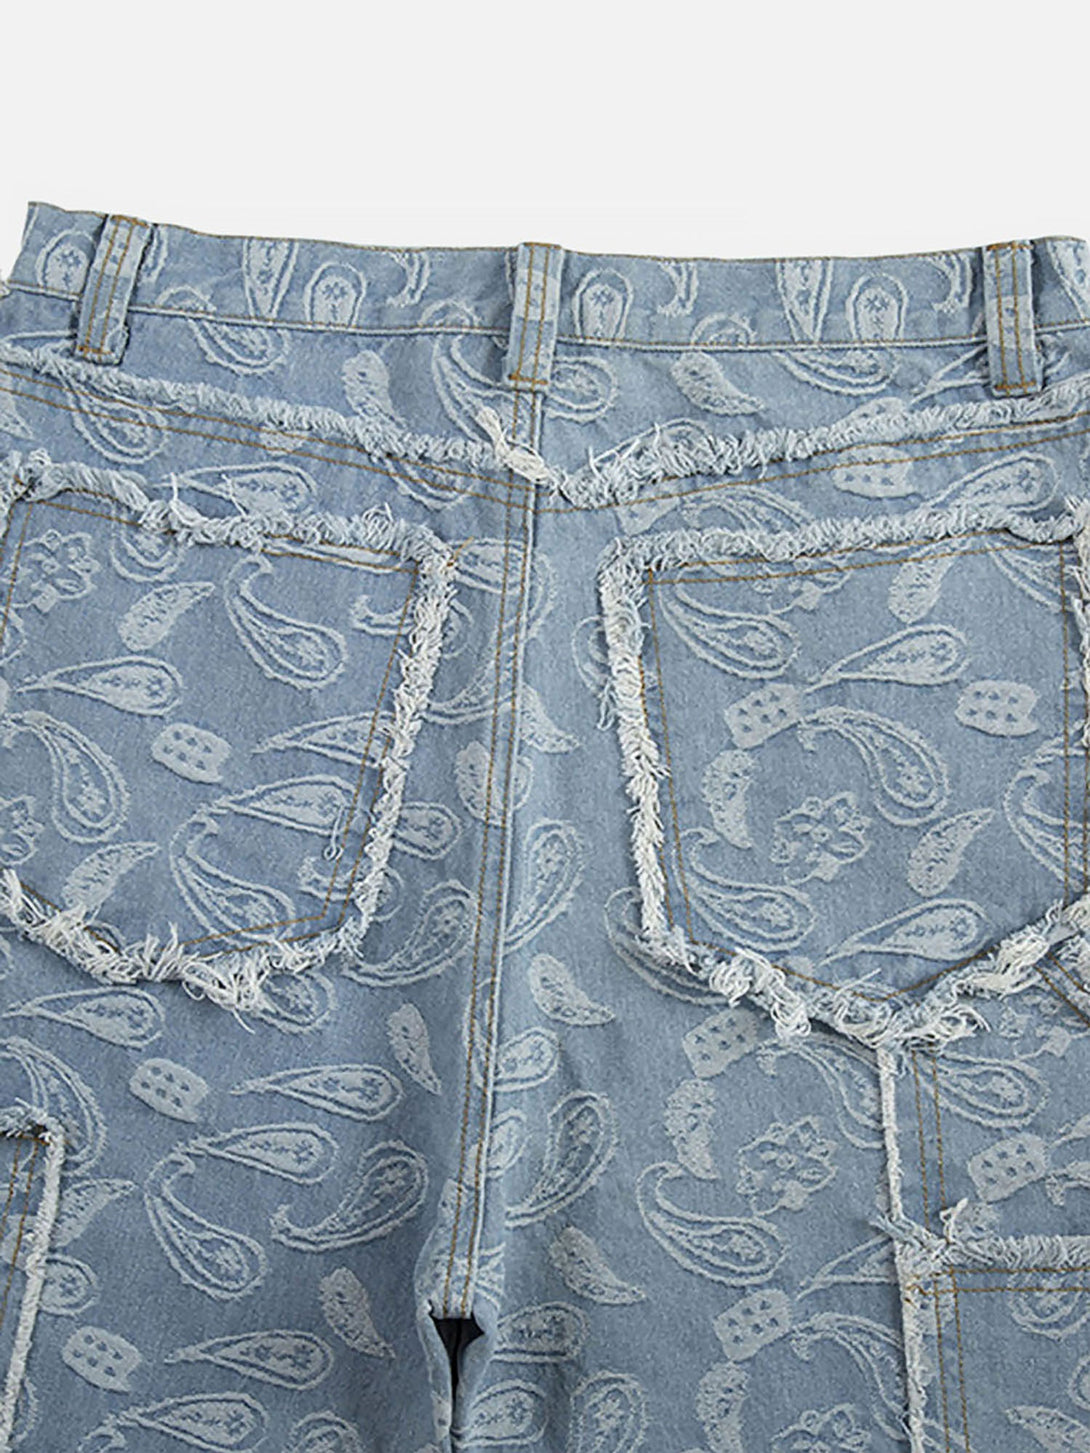 Majesda® - Cashew Flower Cut Jeans- Outfit Ideas - Streetwear Fashion - majesda.com